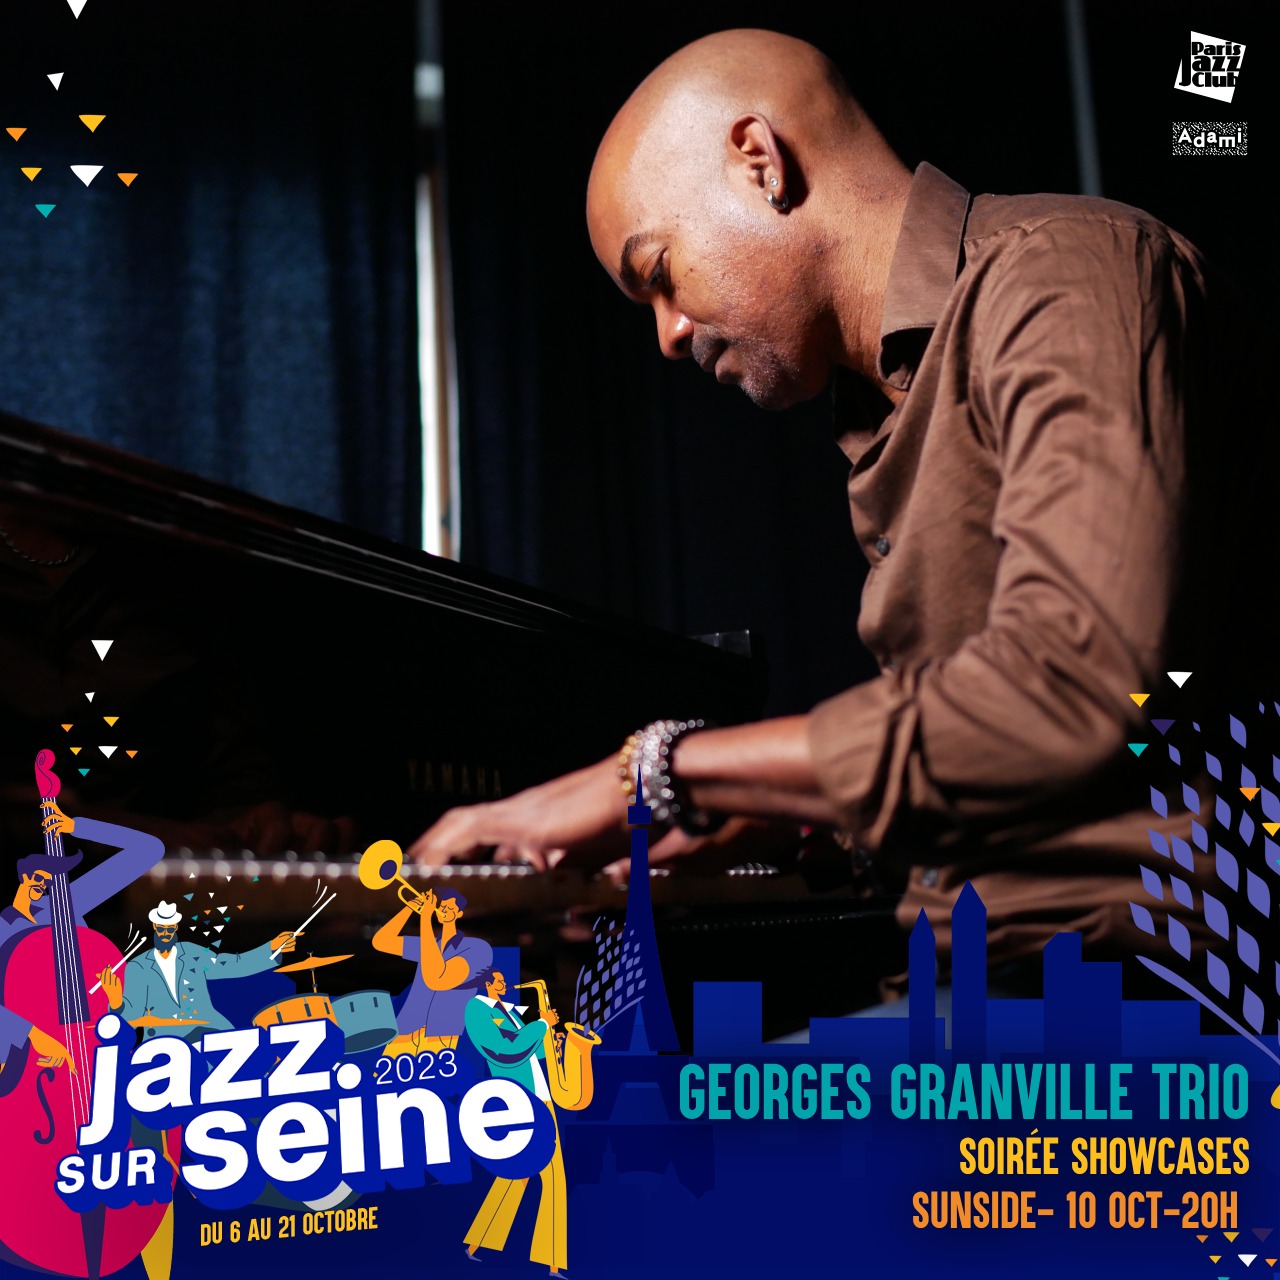 Georges Granville : Showcases Festival Jazz sur Seine 2023